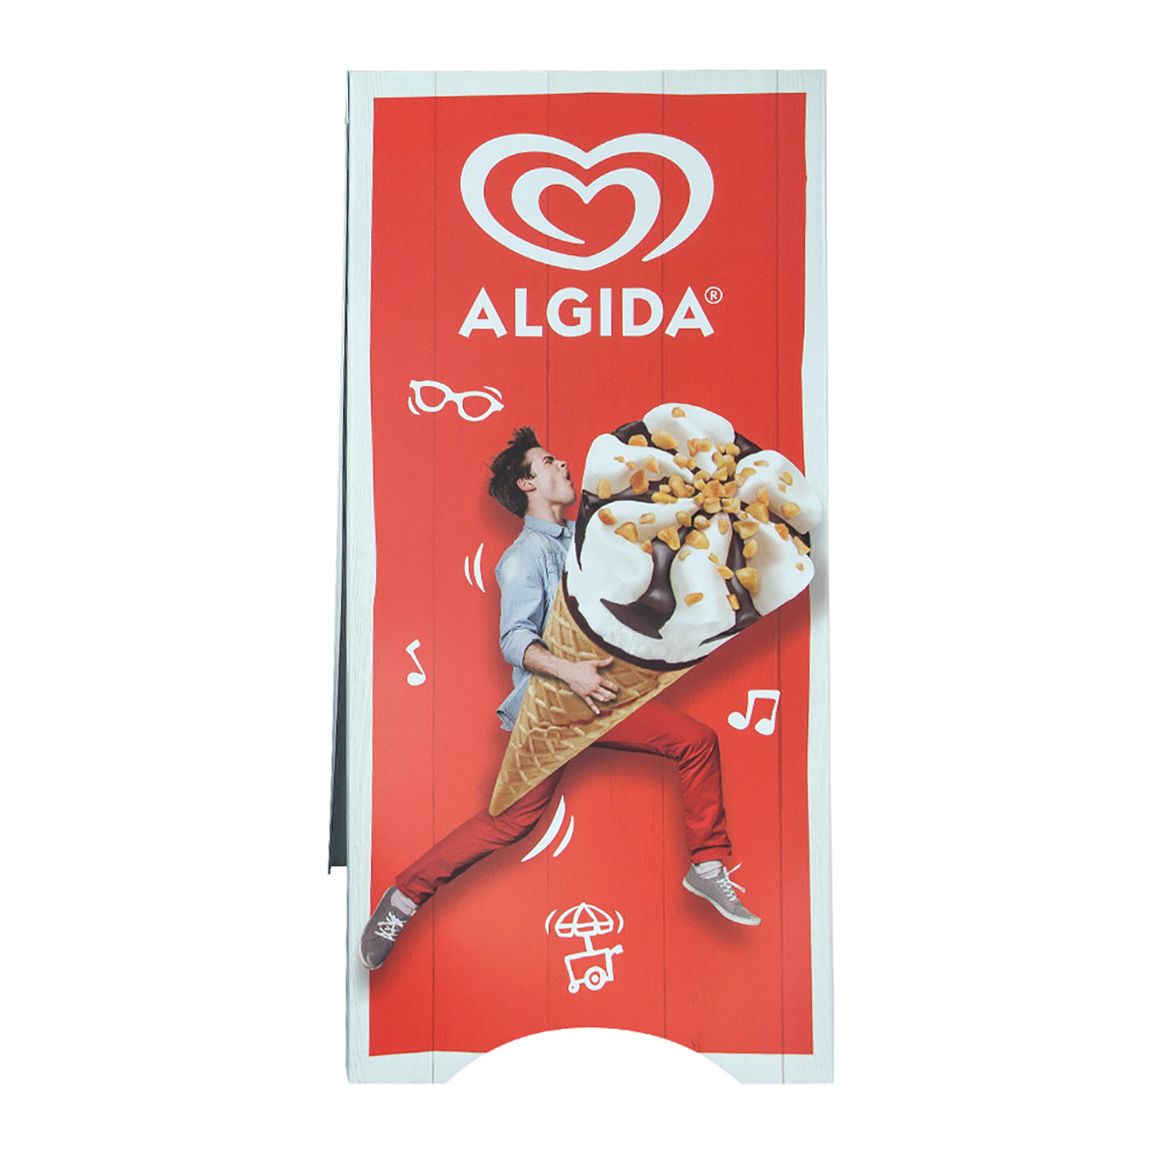 A-board for Algida